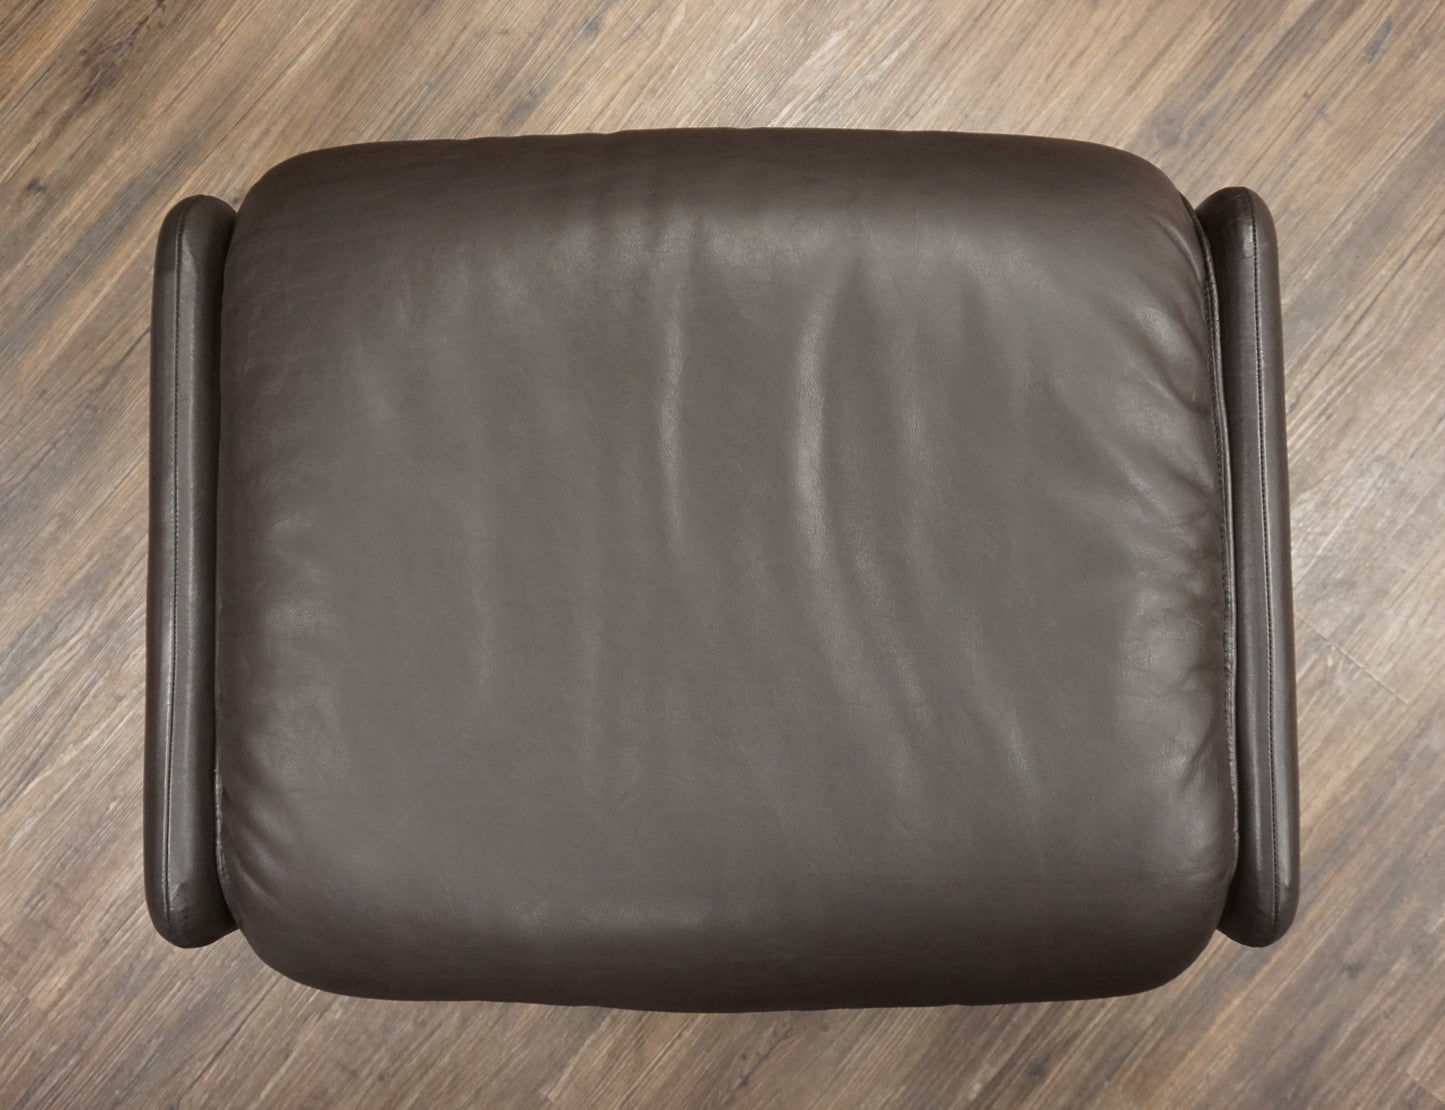 De Sede DS 61 | Sessel mit Funktion & Hocker Leder Braun | Lounge Chair Ottomane